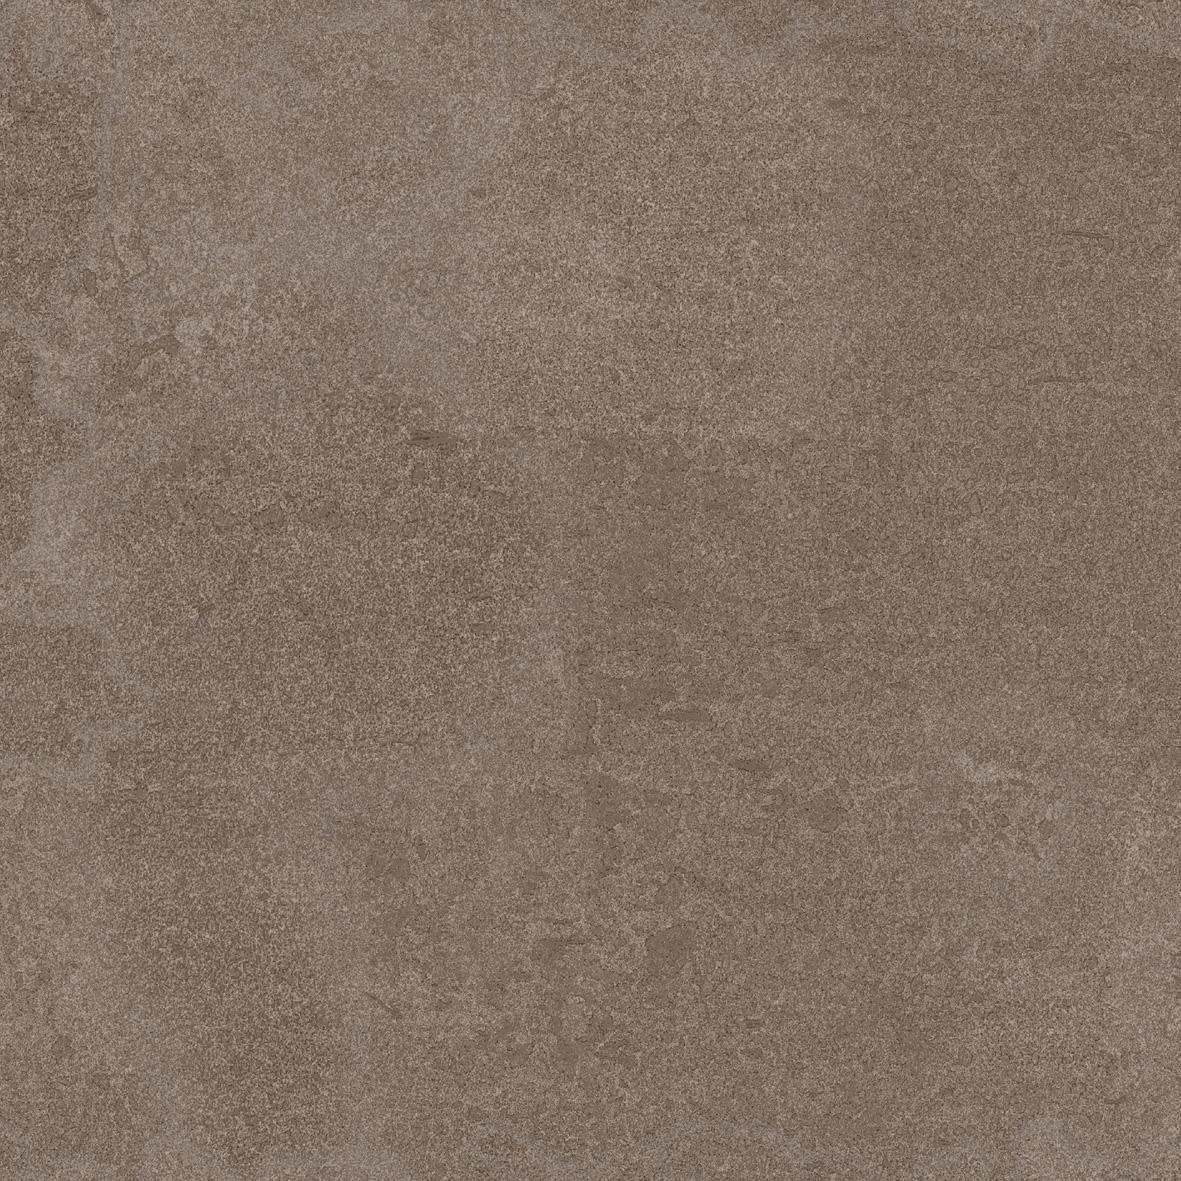 Cement Tiles for Bathroom Tiles, Outdoor/Terrace